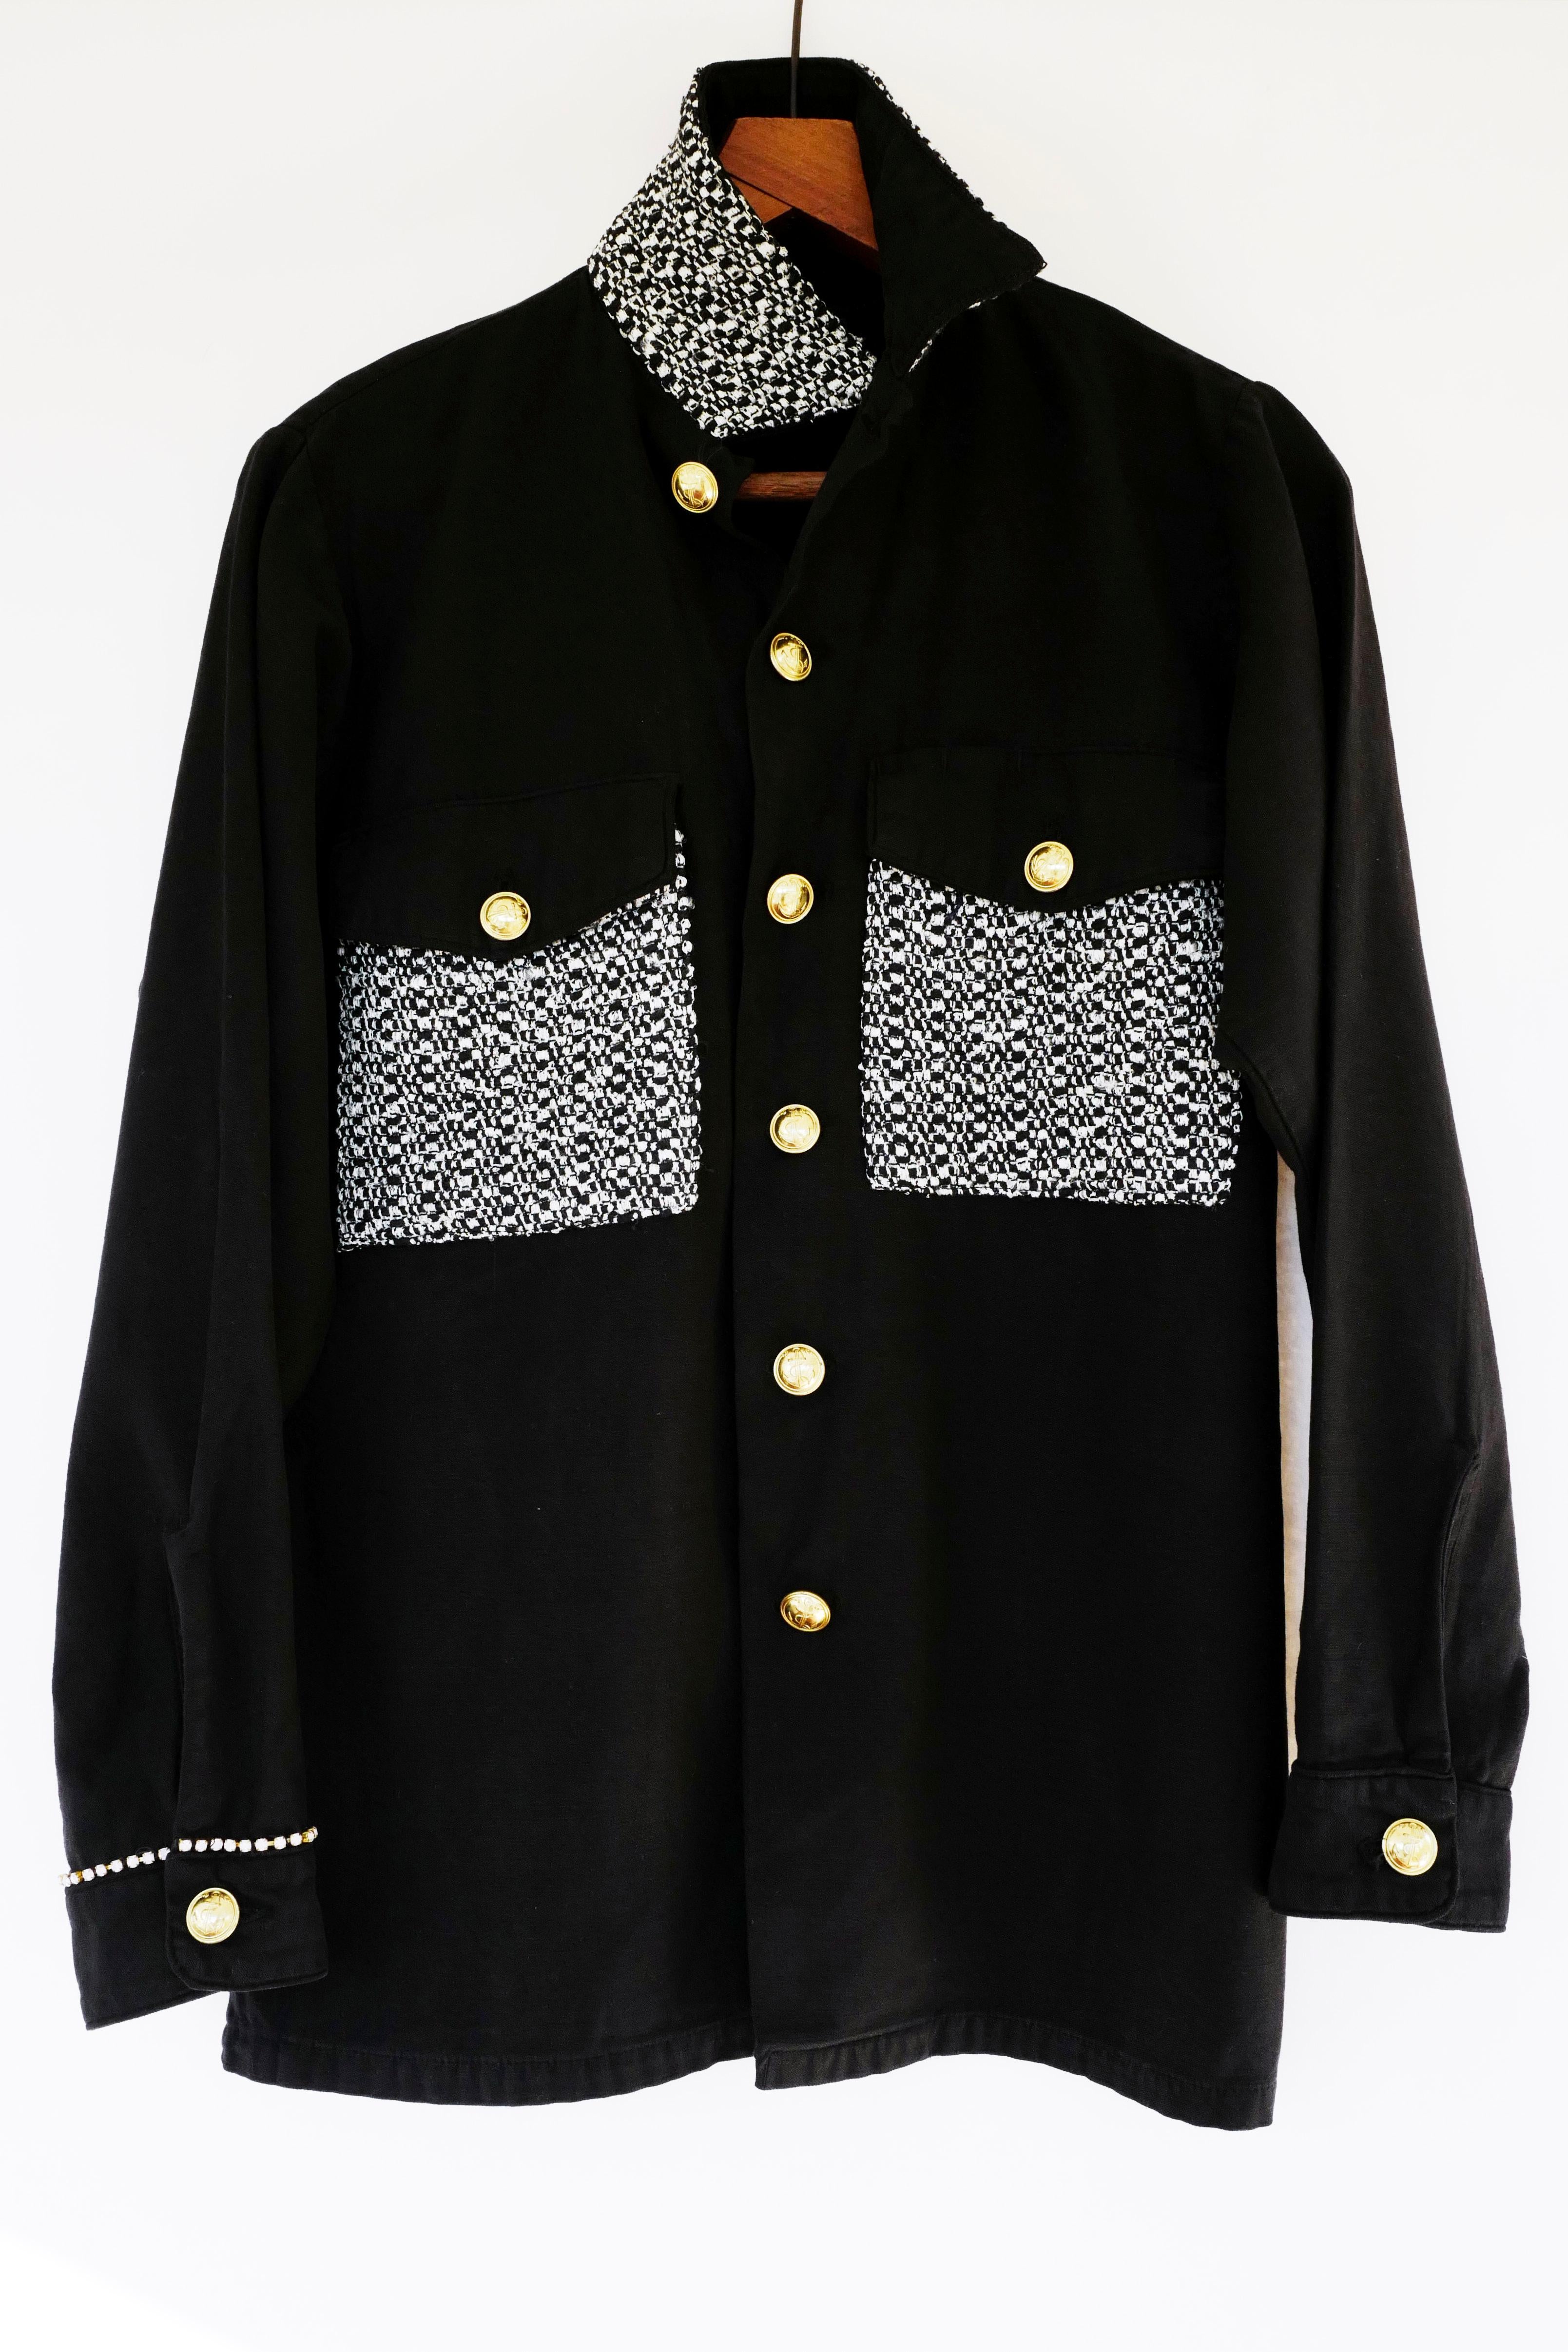 Women's Embellished Rhinestone Jacket Black Lurex Tweed Military Gold Buttons J Dauphin 